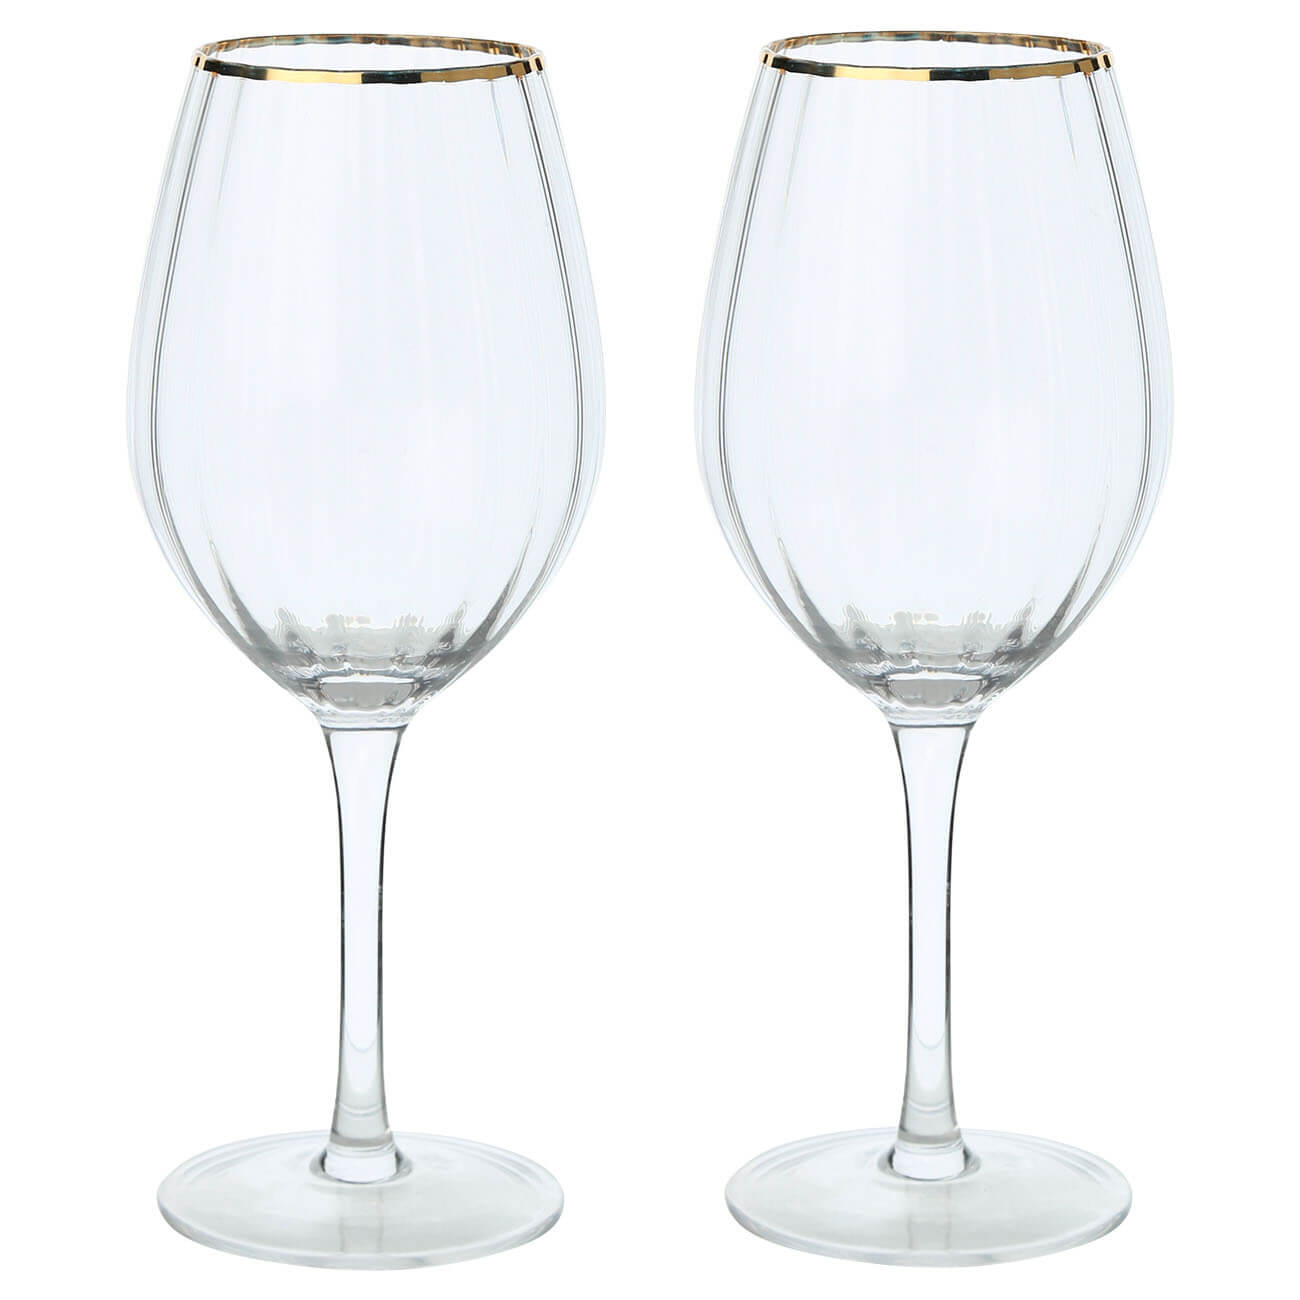 Бокал для вина, 530 мл, 2 шт, стекло, с золотым кантом, Lombardy - фото 1